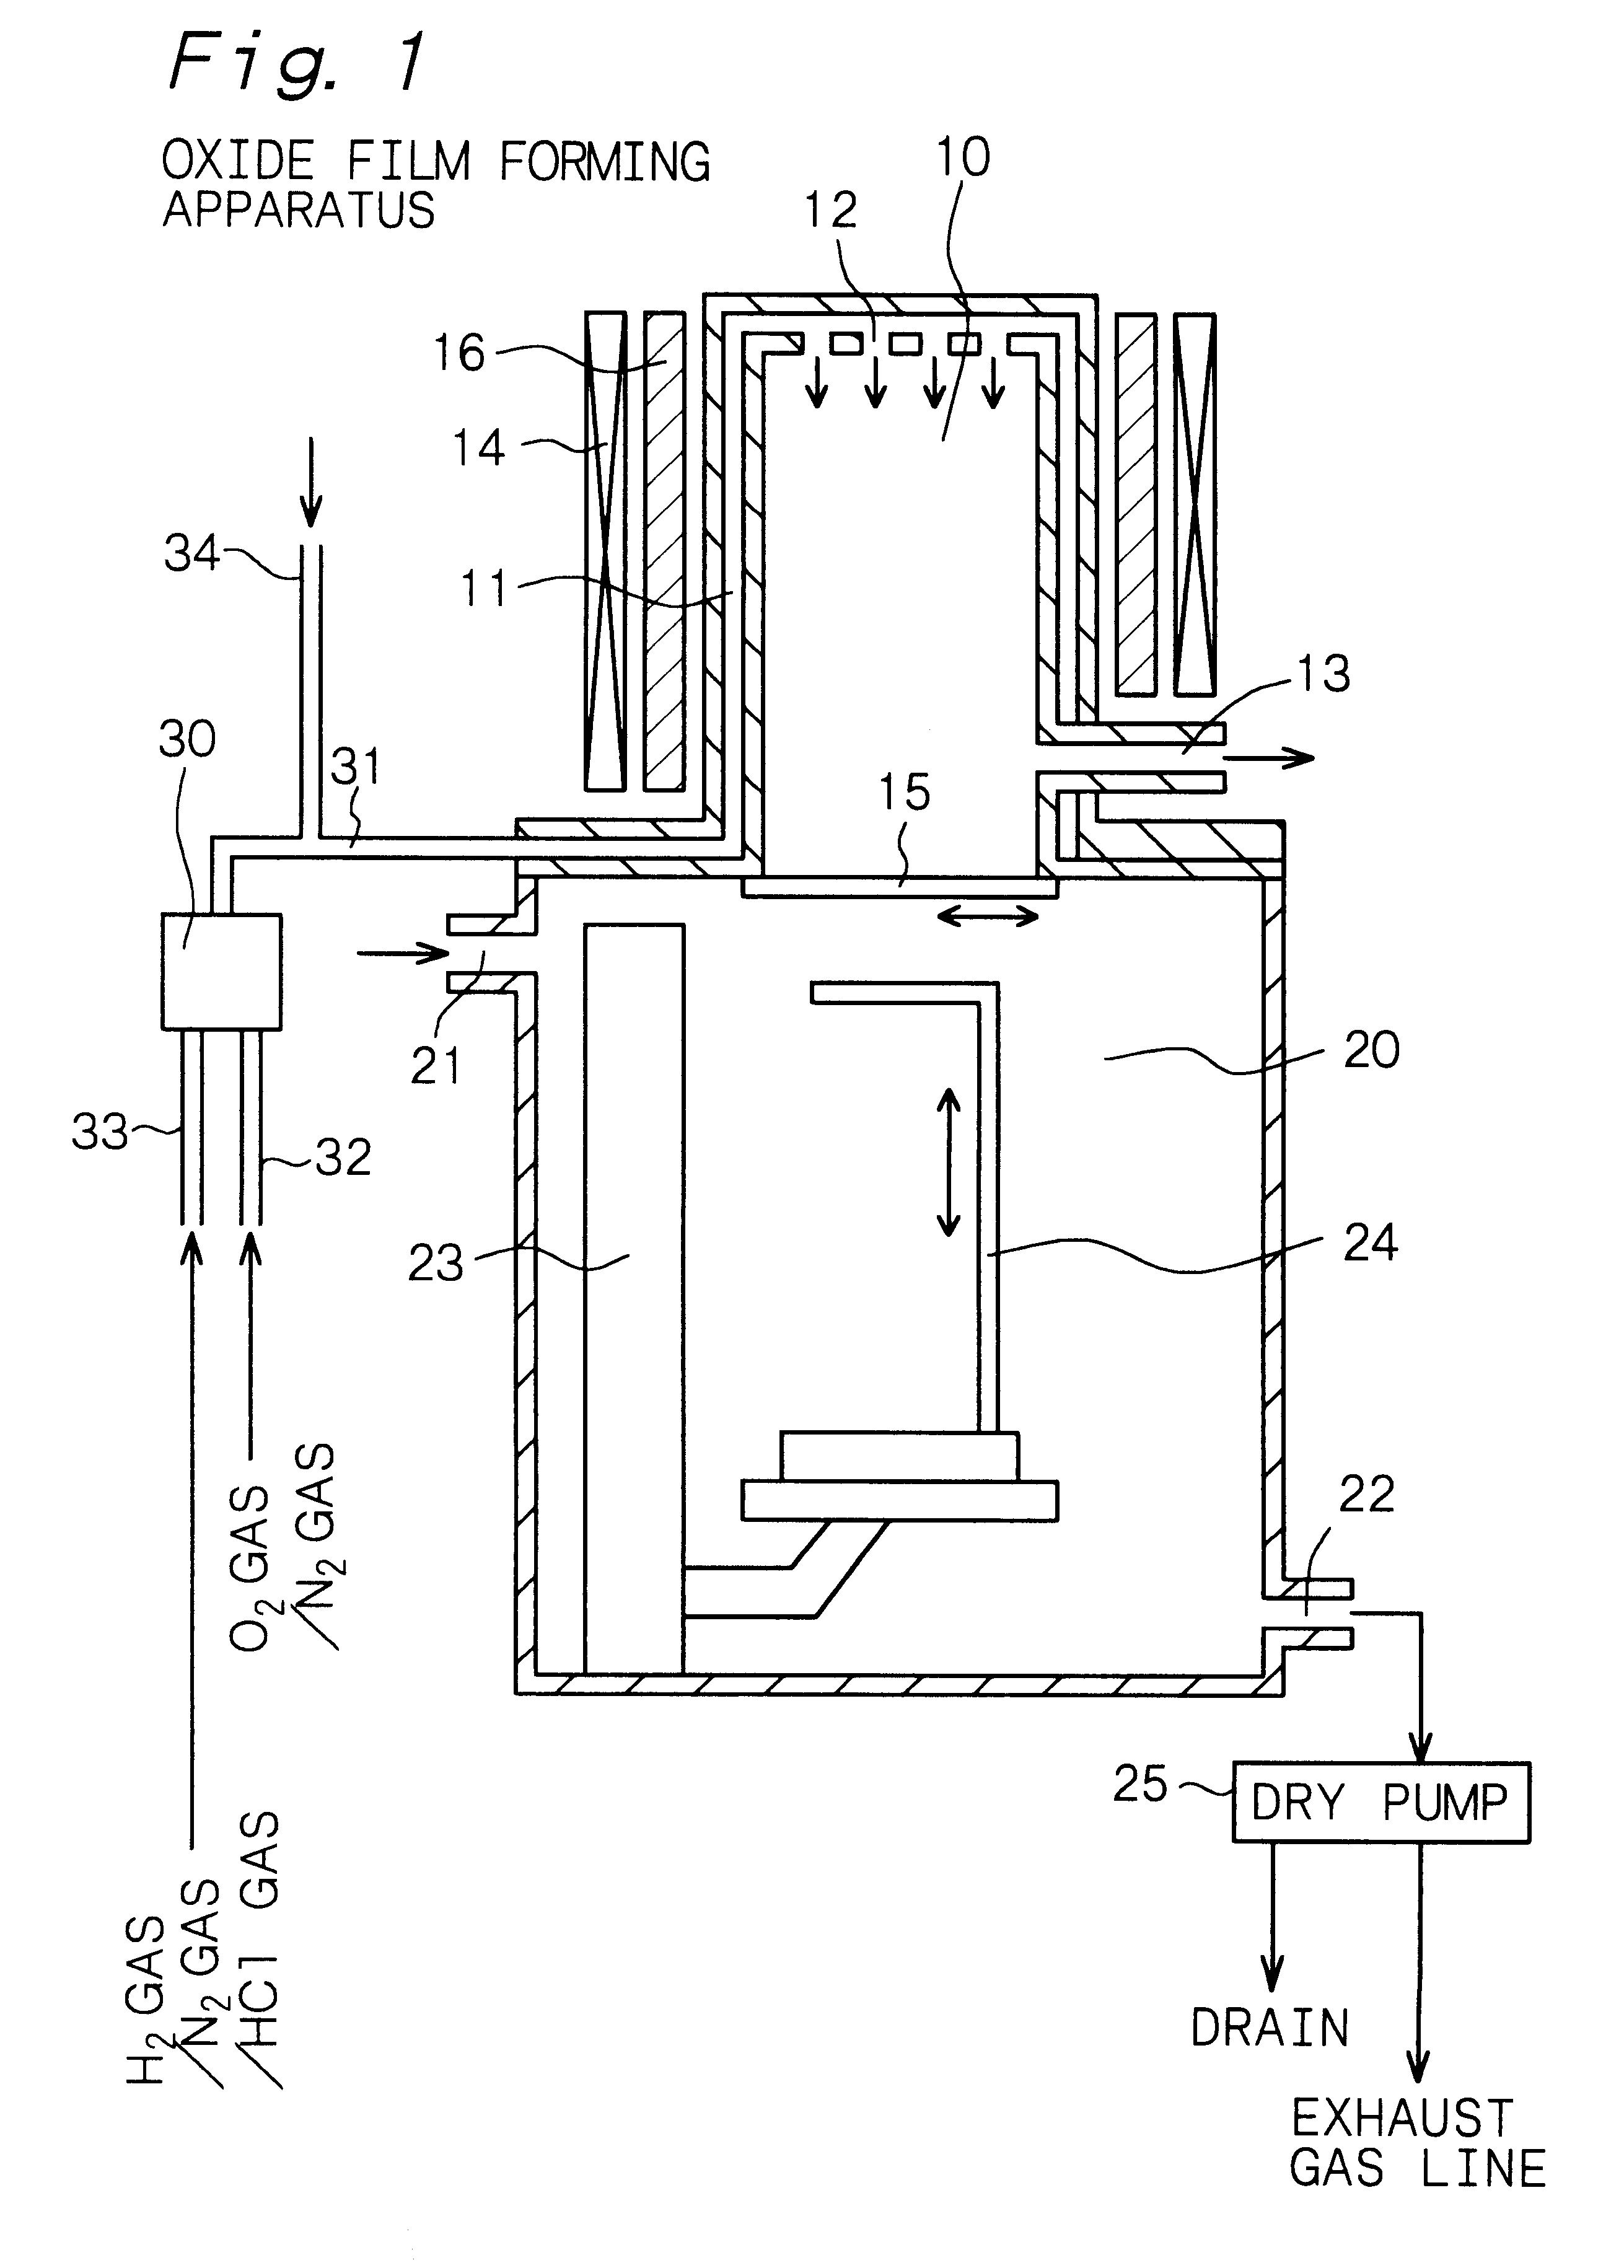 Method of forming oxide film